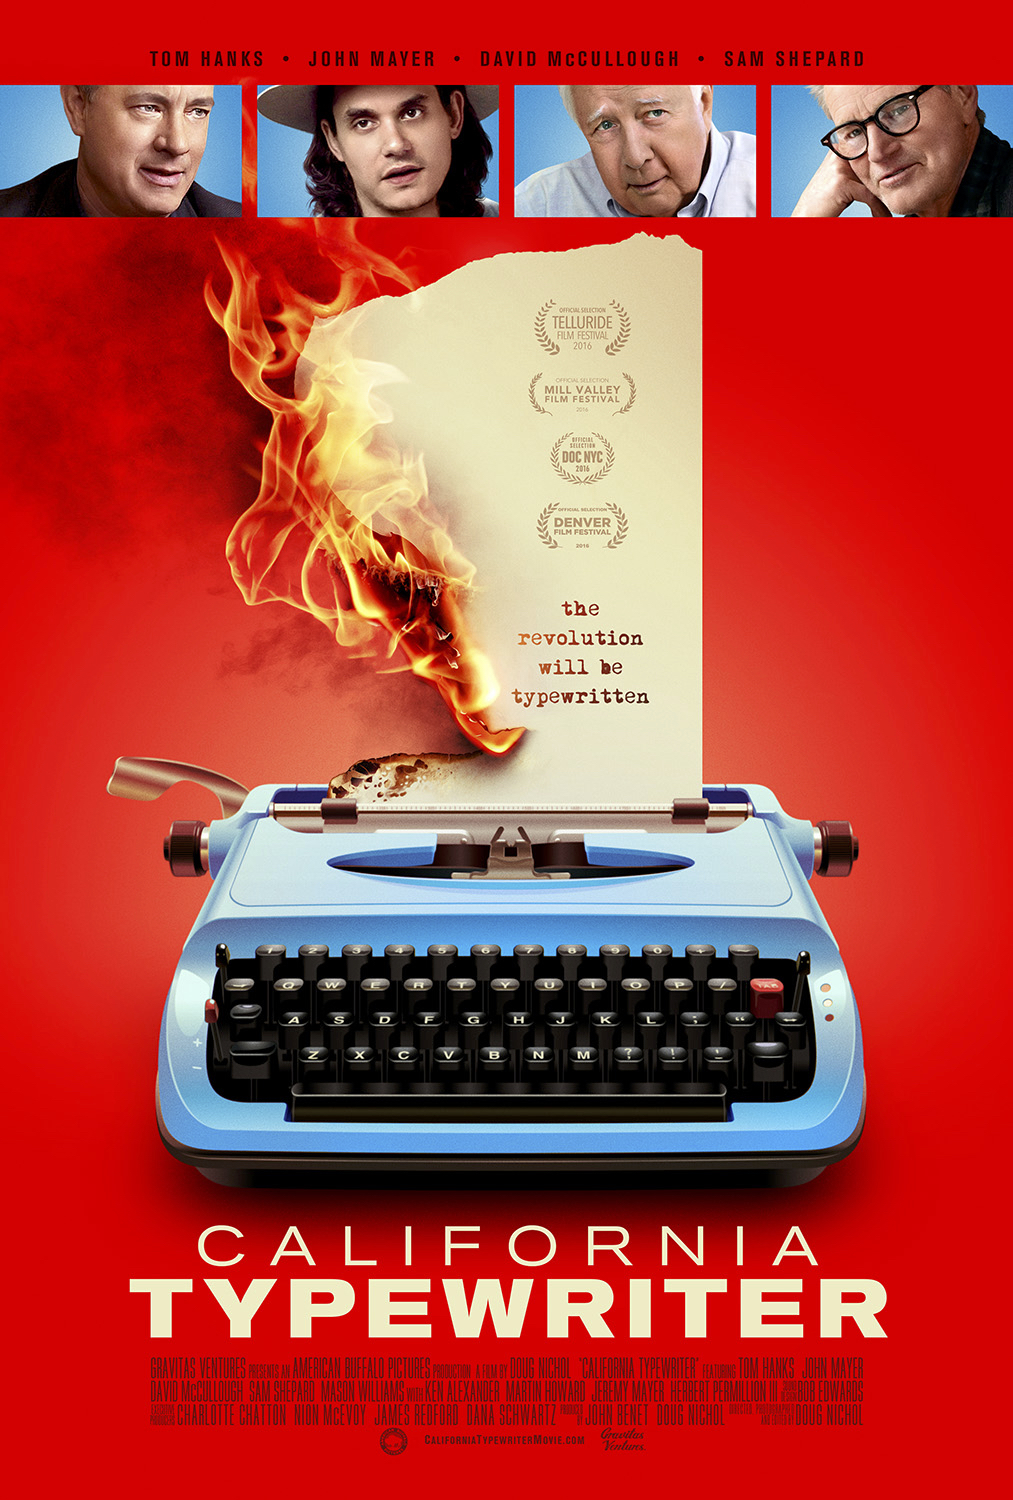 Nonton film California Typewriter layarkaca21 indoxx1 ganool online streaming terbaru